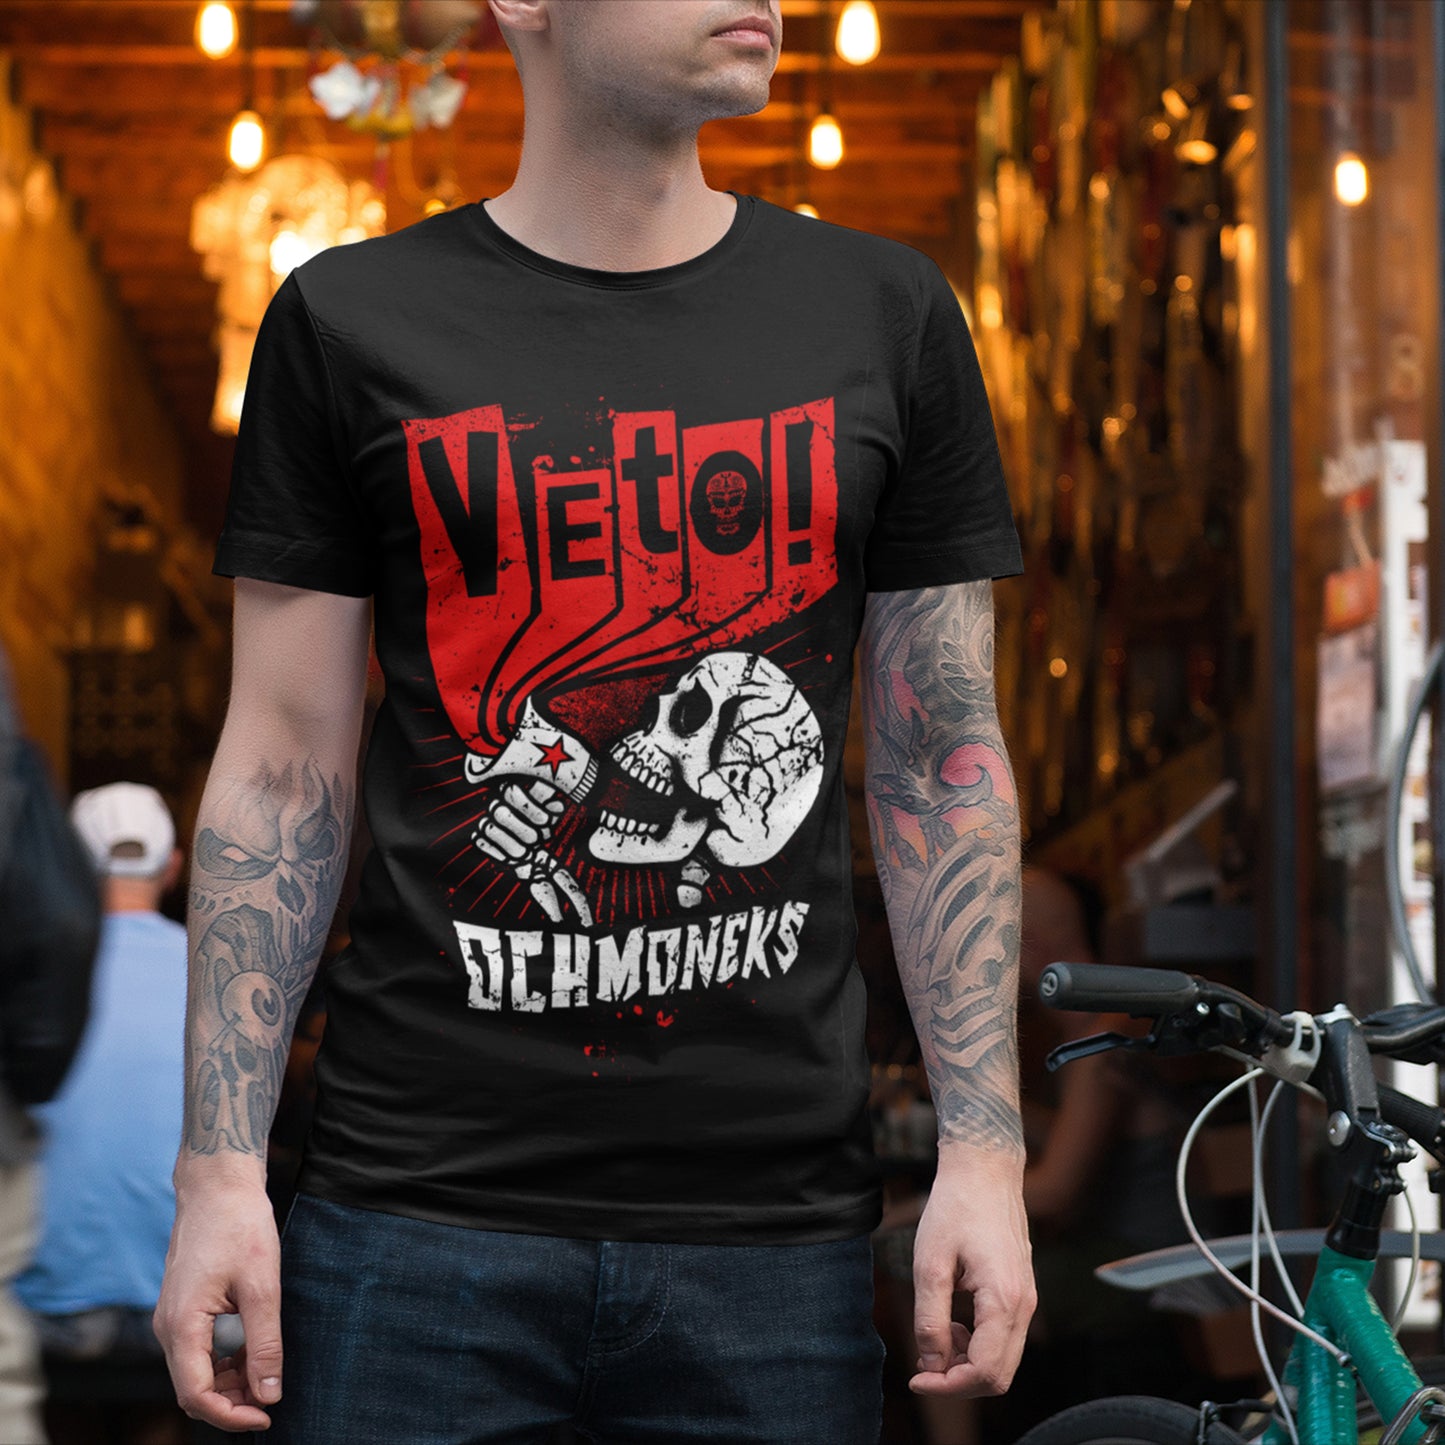 T-Shirt "Veto"